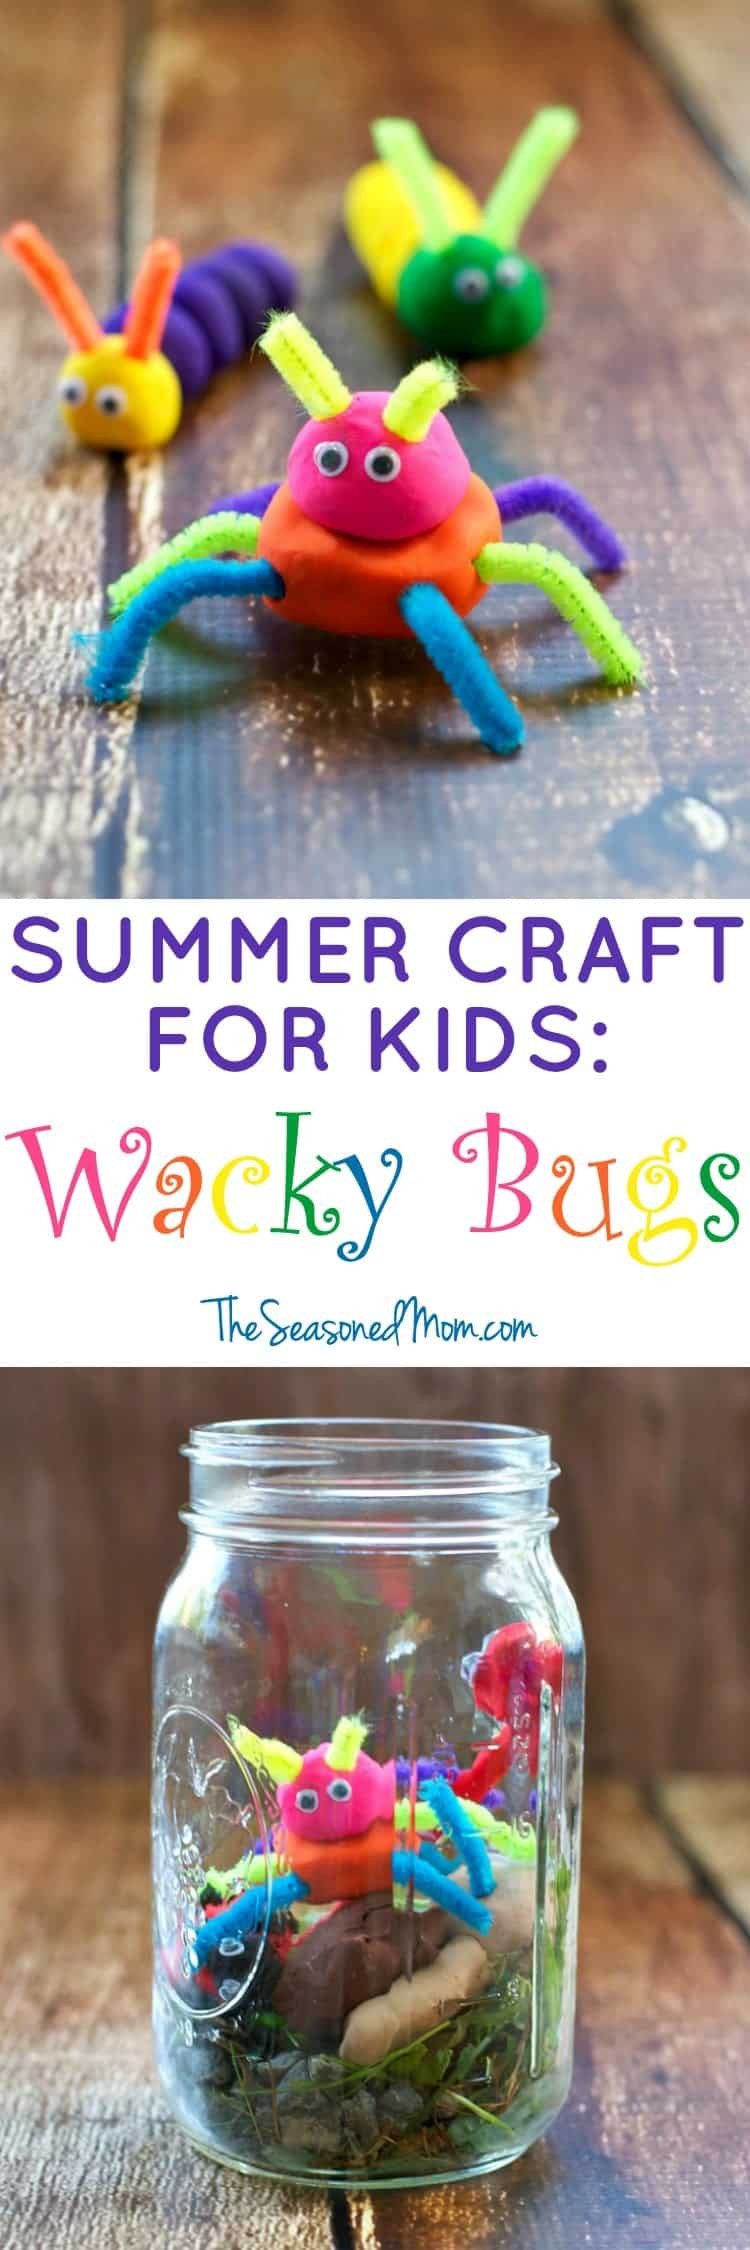 Summer Fun Craft
 Summer Craft for Kids Wacky Bugs The Seasoned Mom